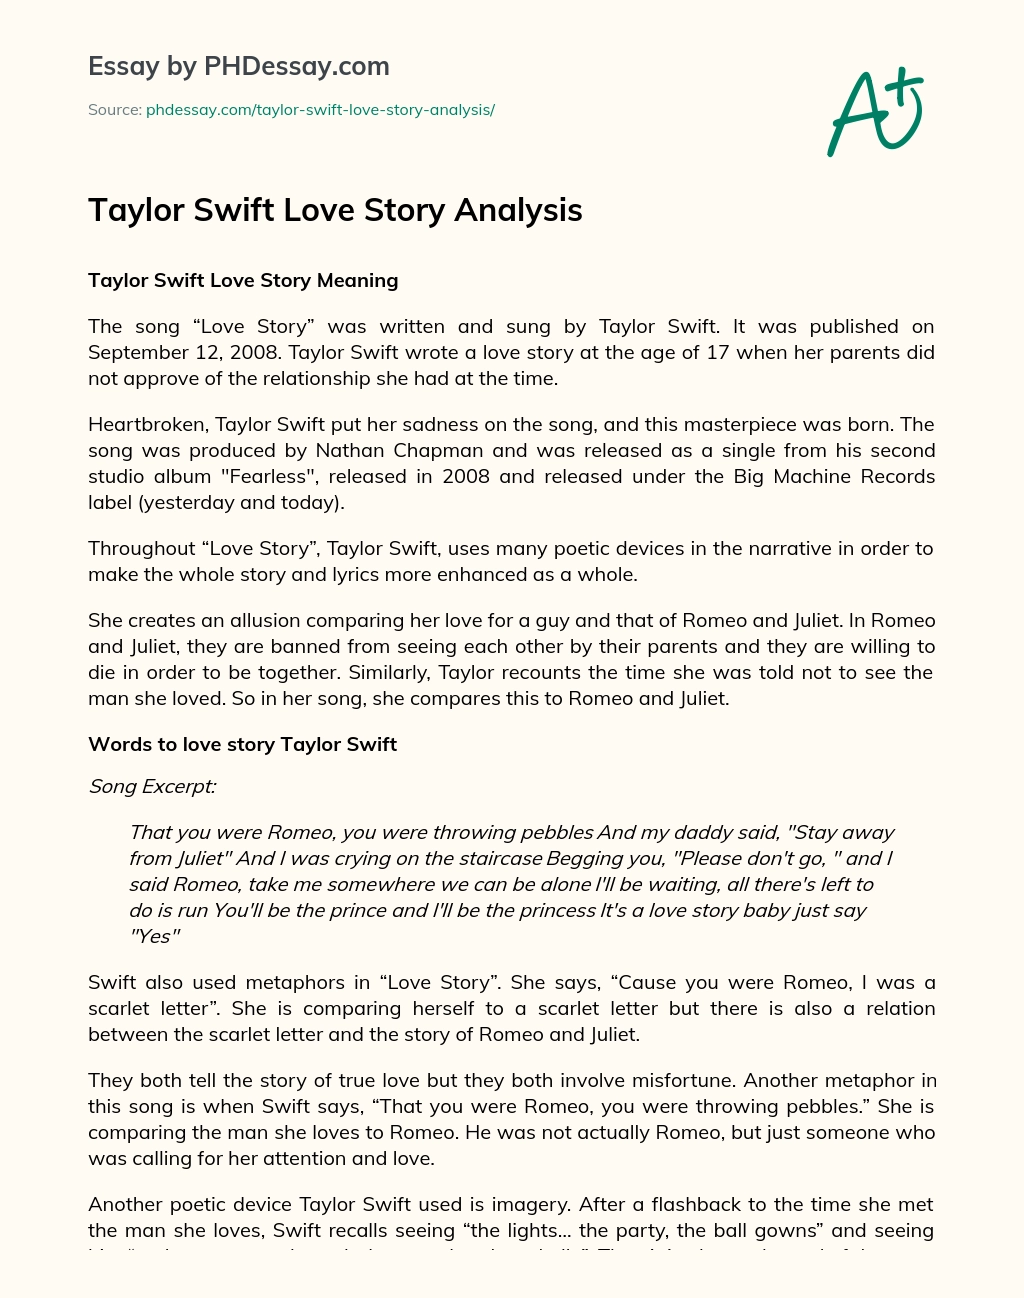 argumentative essay on taylor swift